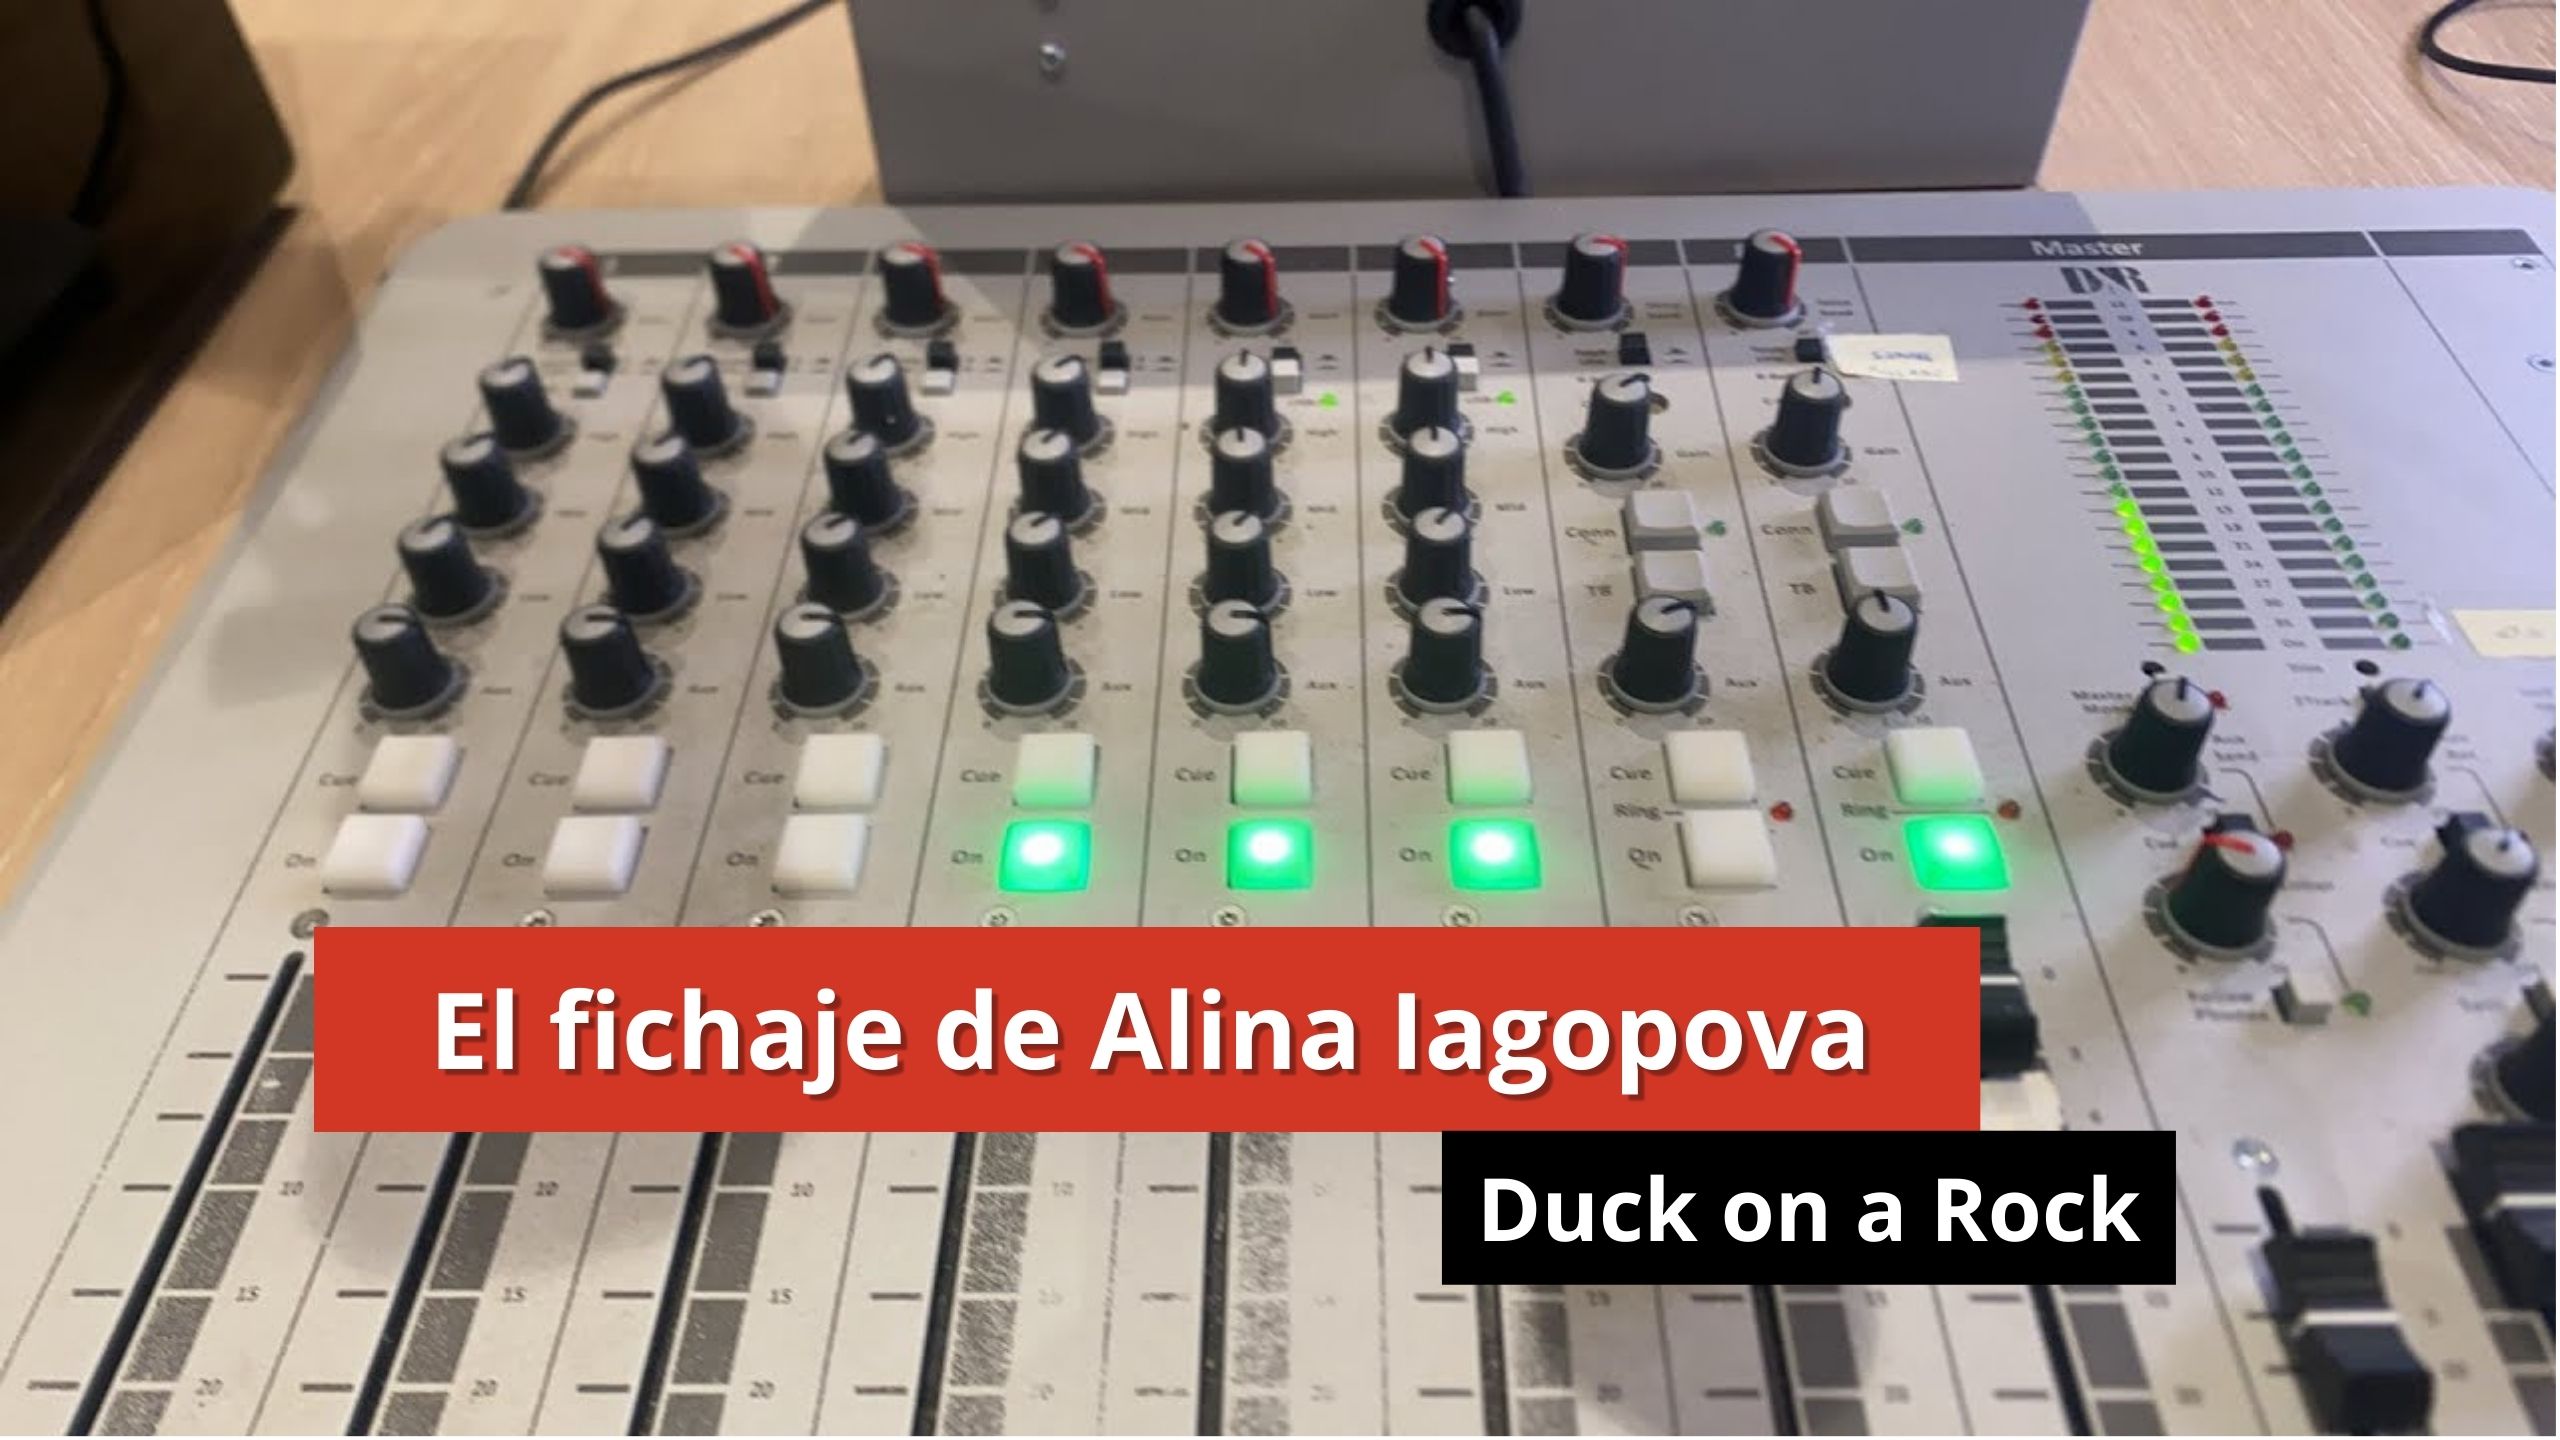 10-01-24 El fichaje de Alina Iagopova - Duck on a Rock